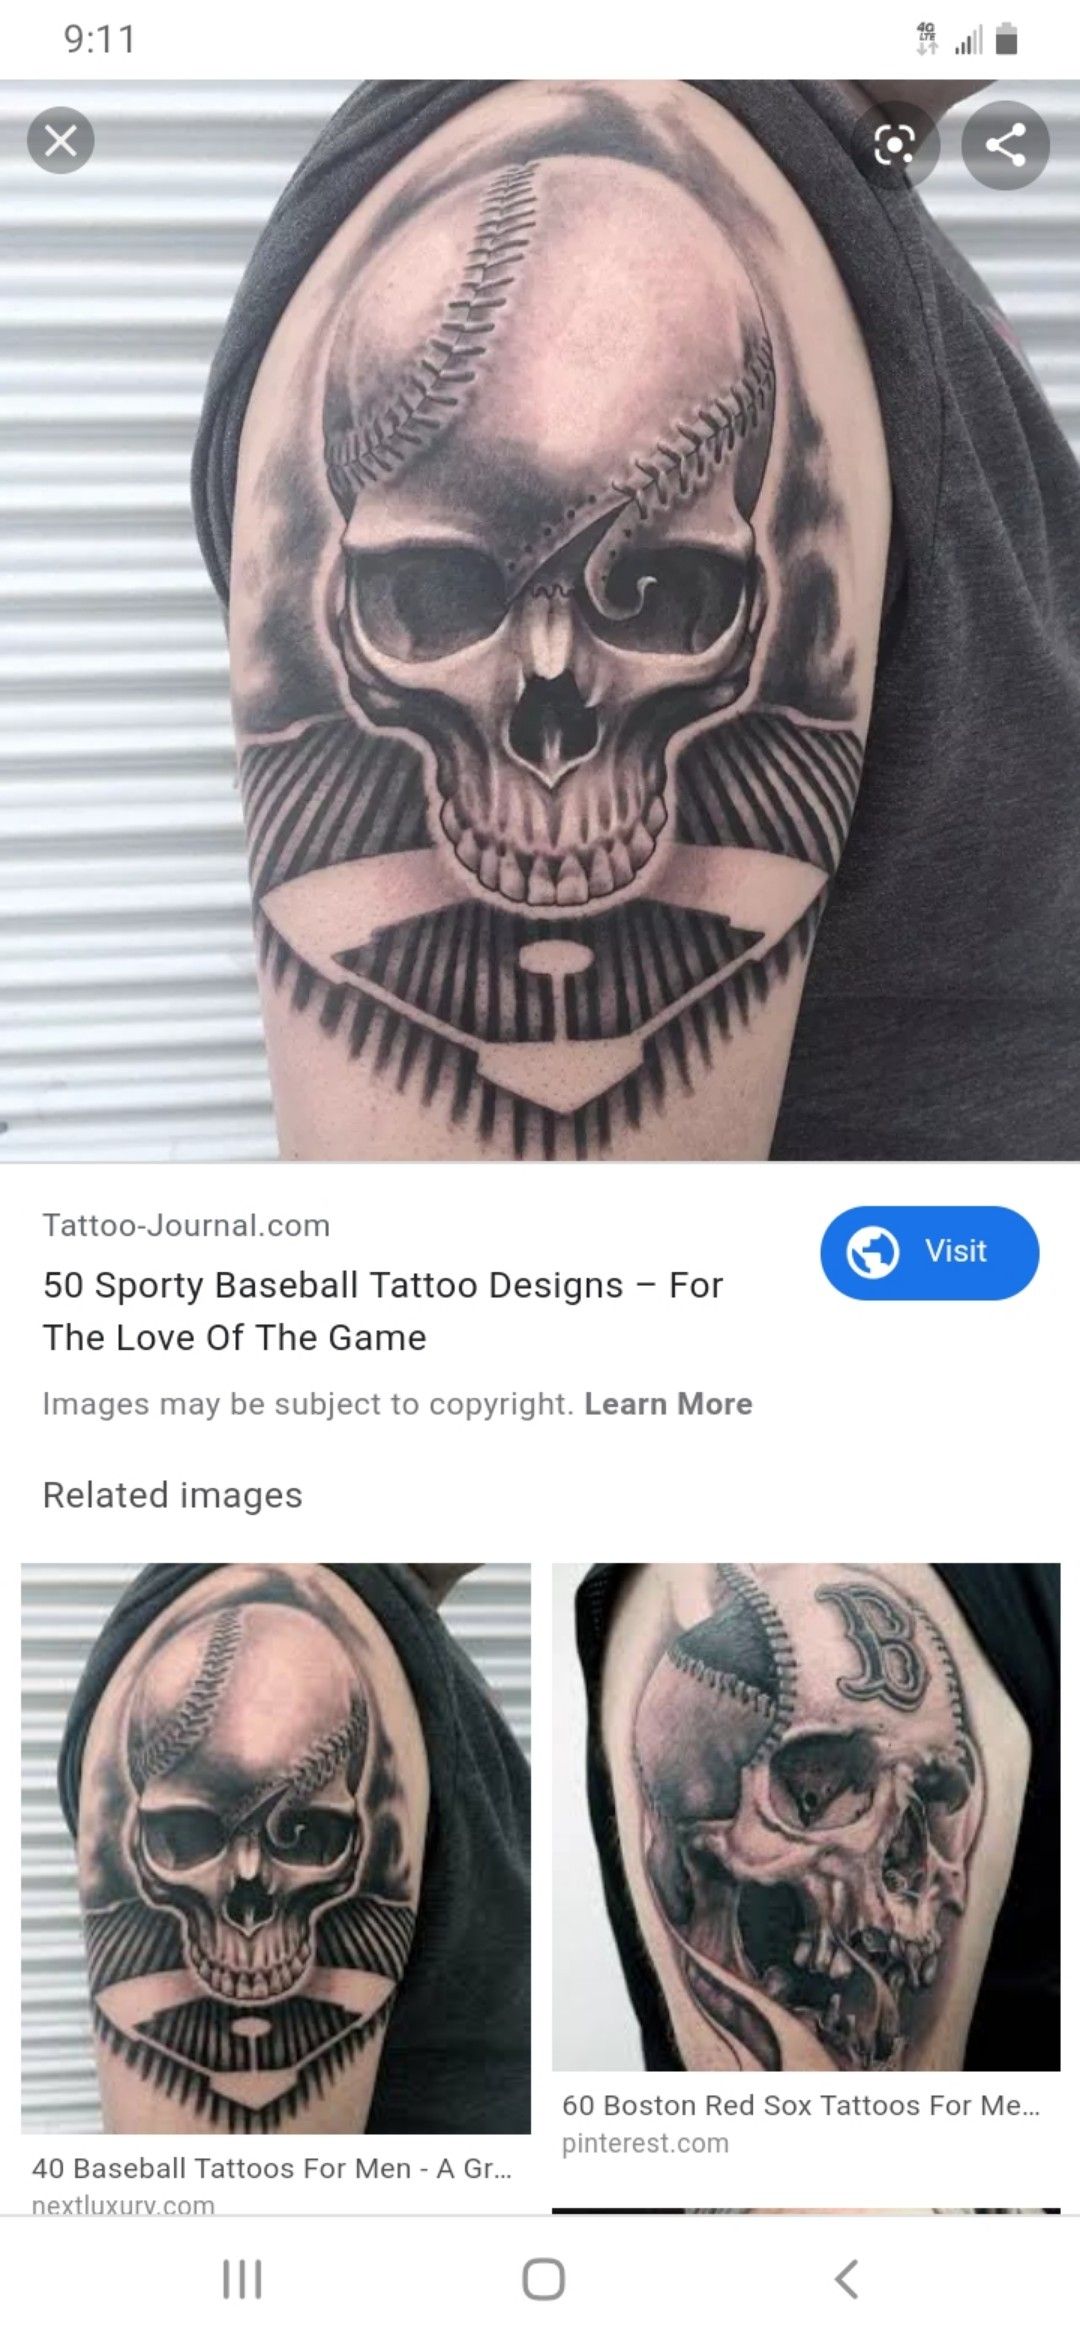 60 Boston Red Sox Tattoos For Men - Baseball Ink Ideas [Video] [Video]